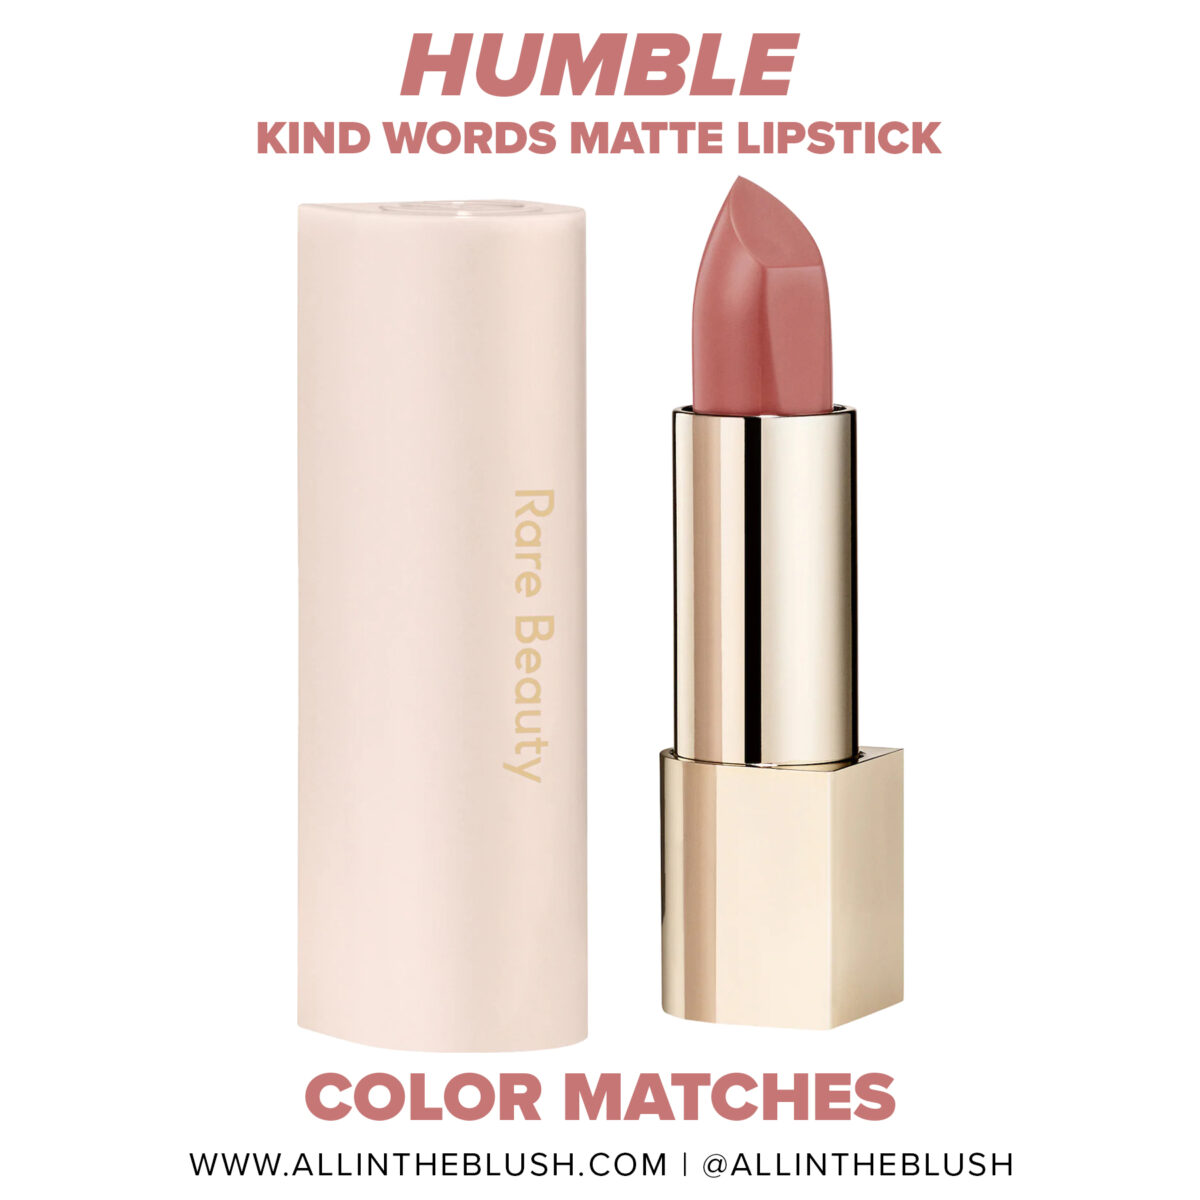 Rare Beauty Humble Kind Words Matte Lipstick Color Matches